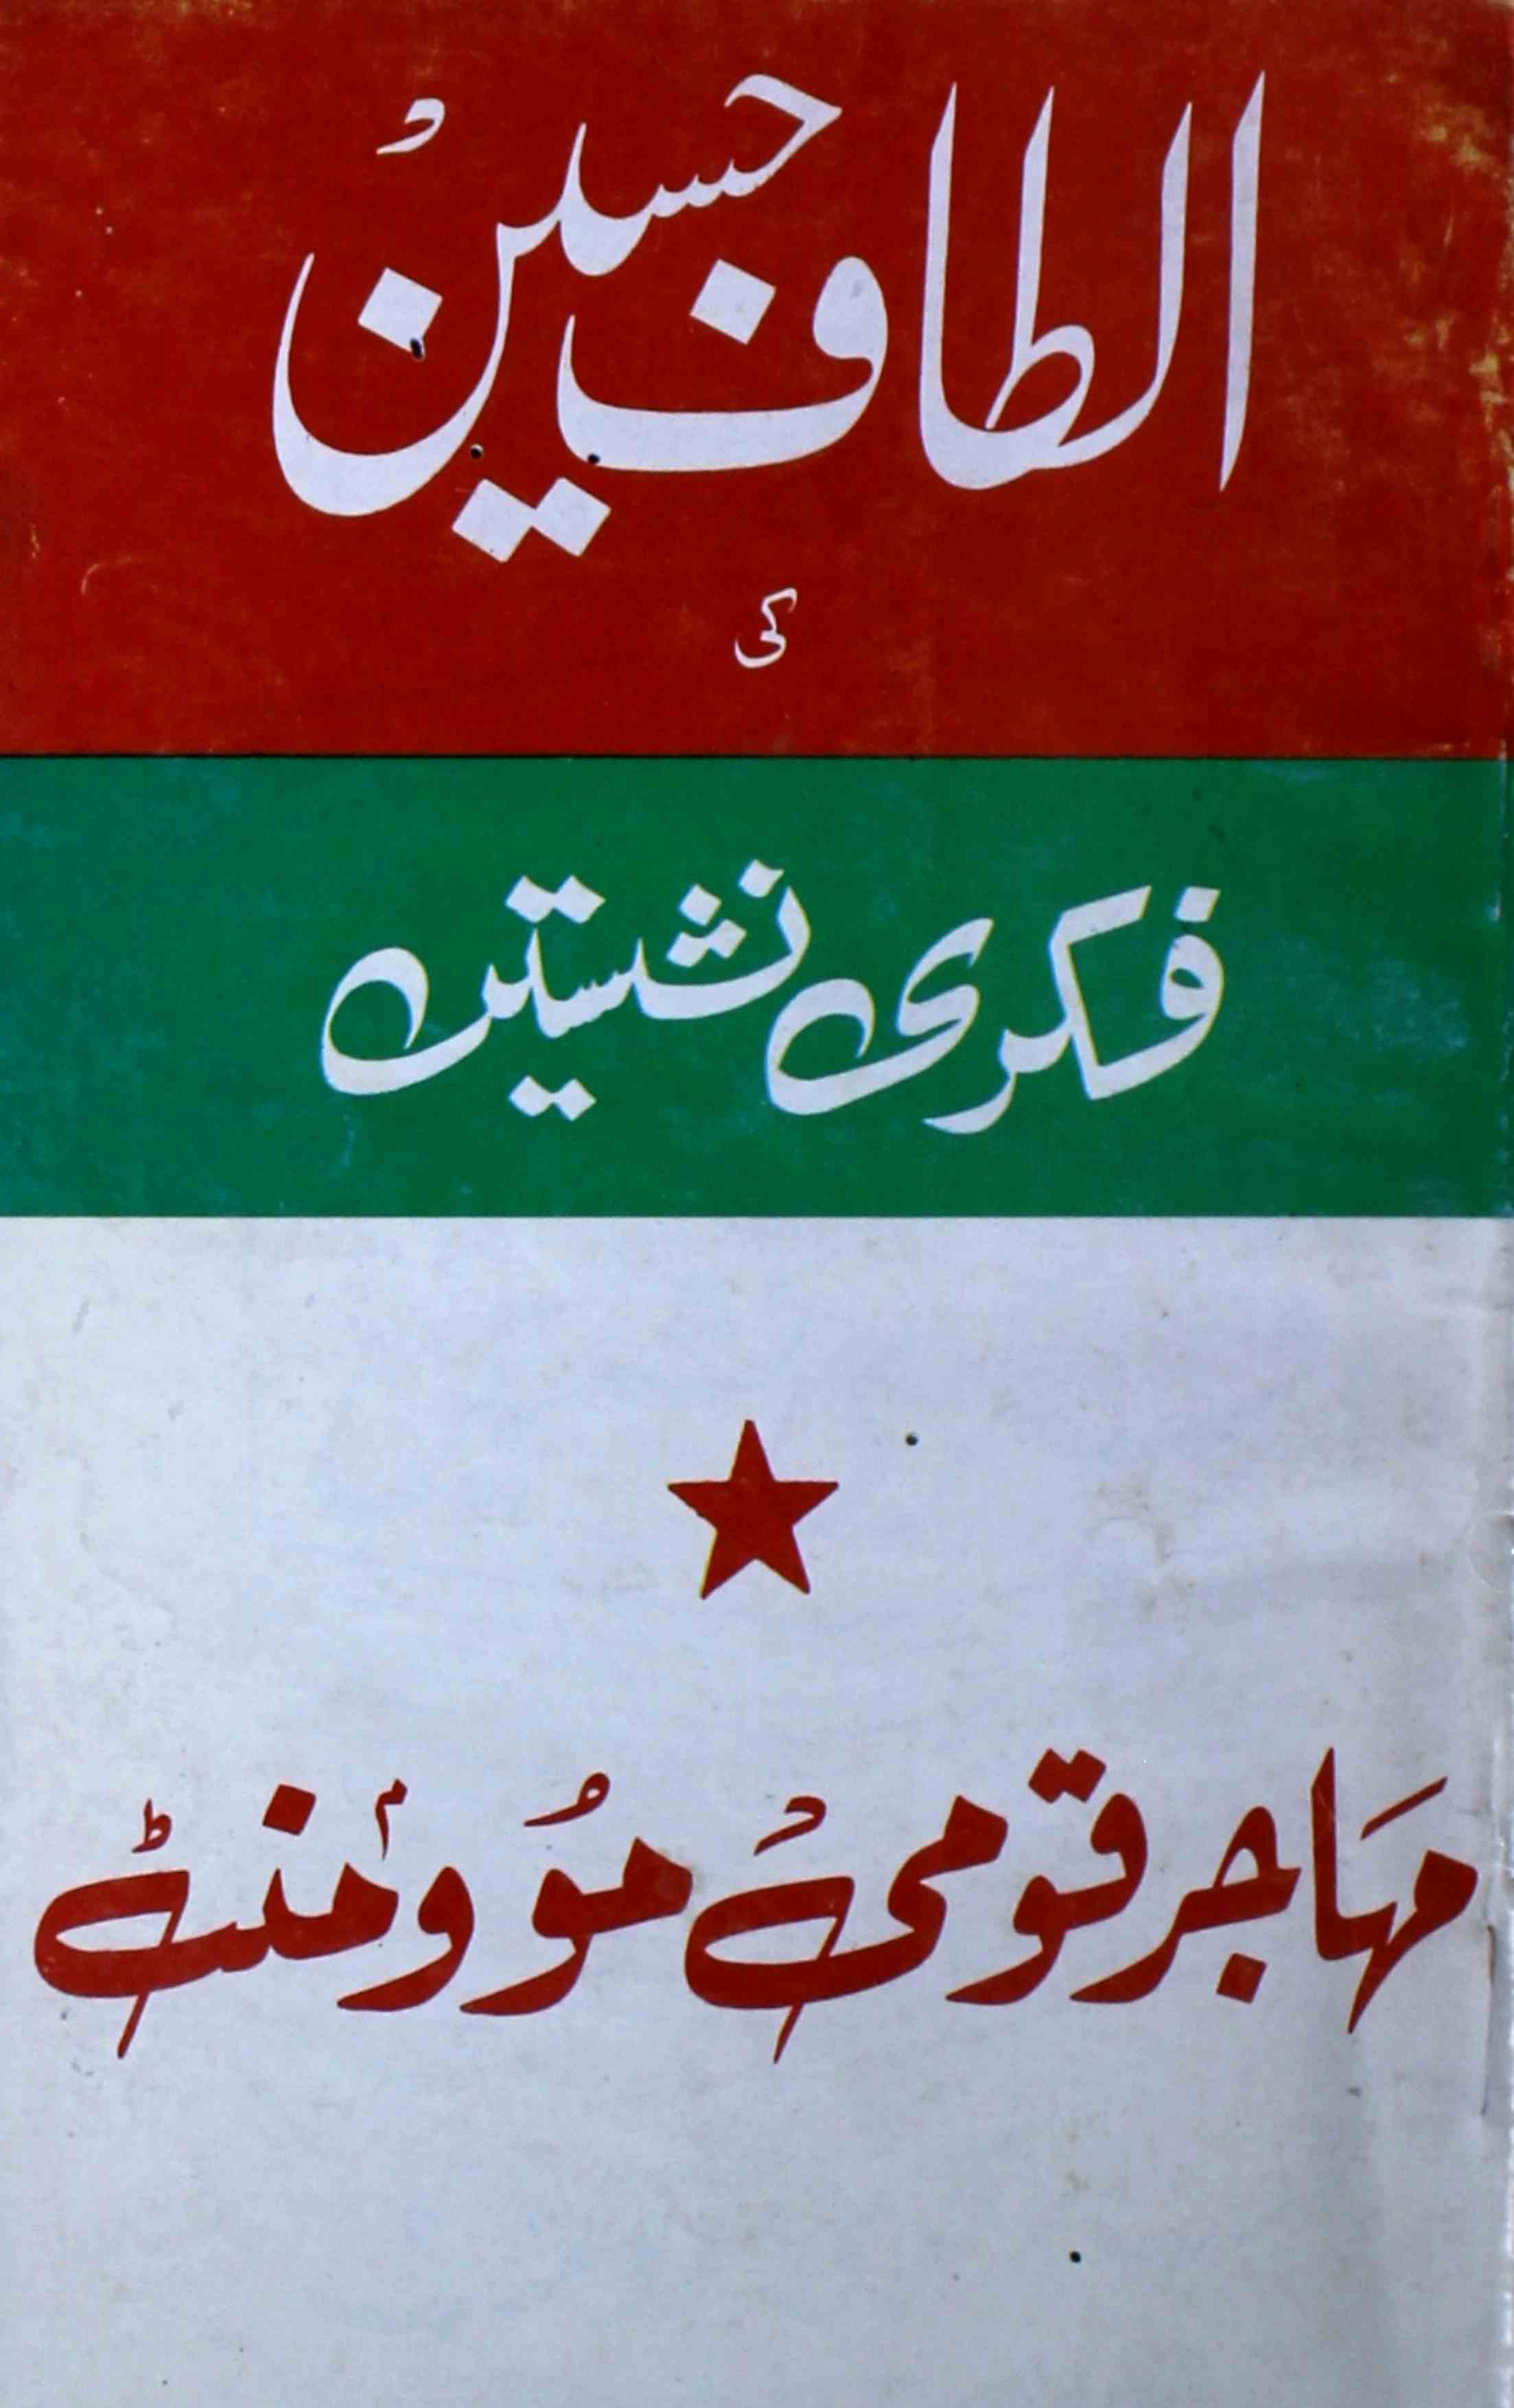 Altaf Husain Ki Fikri Nashisten